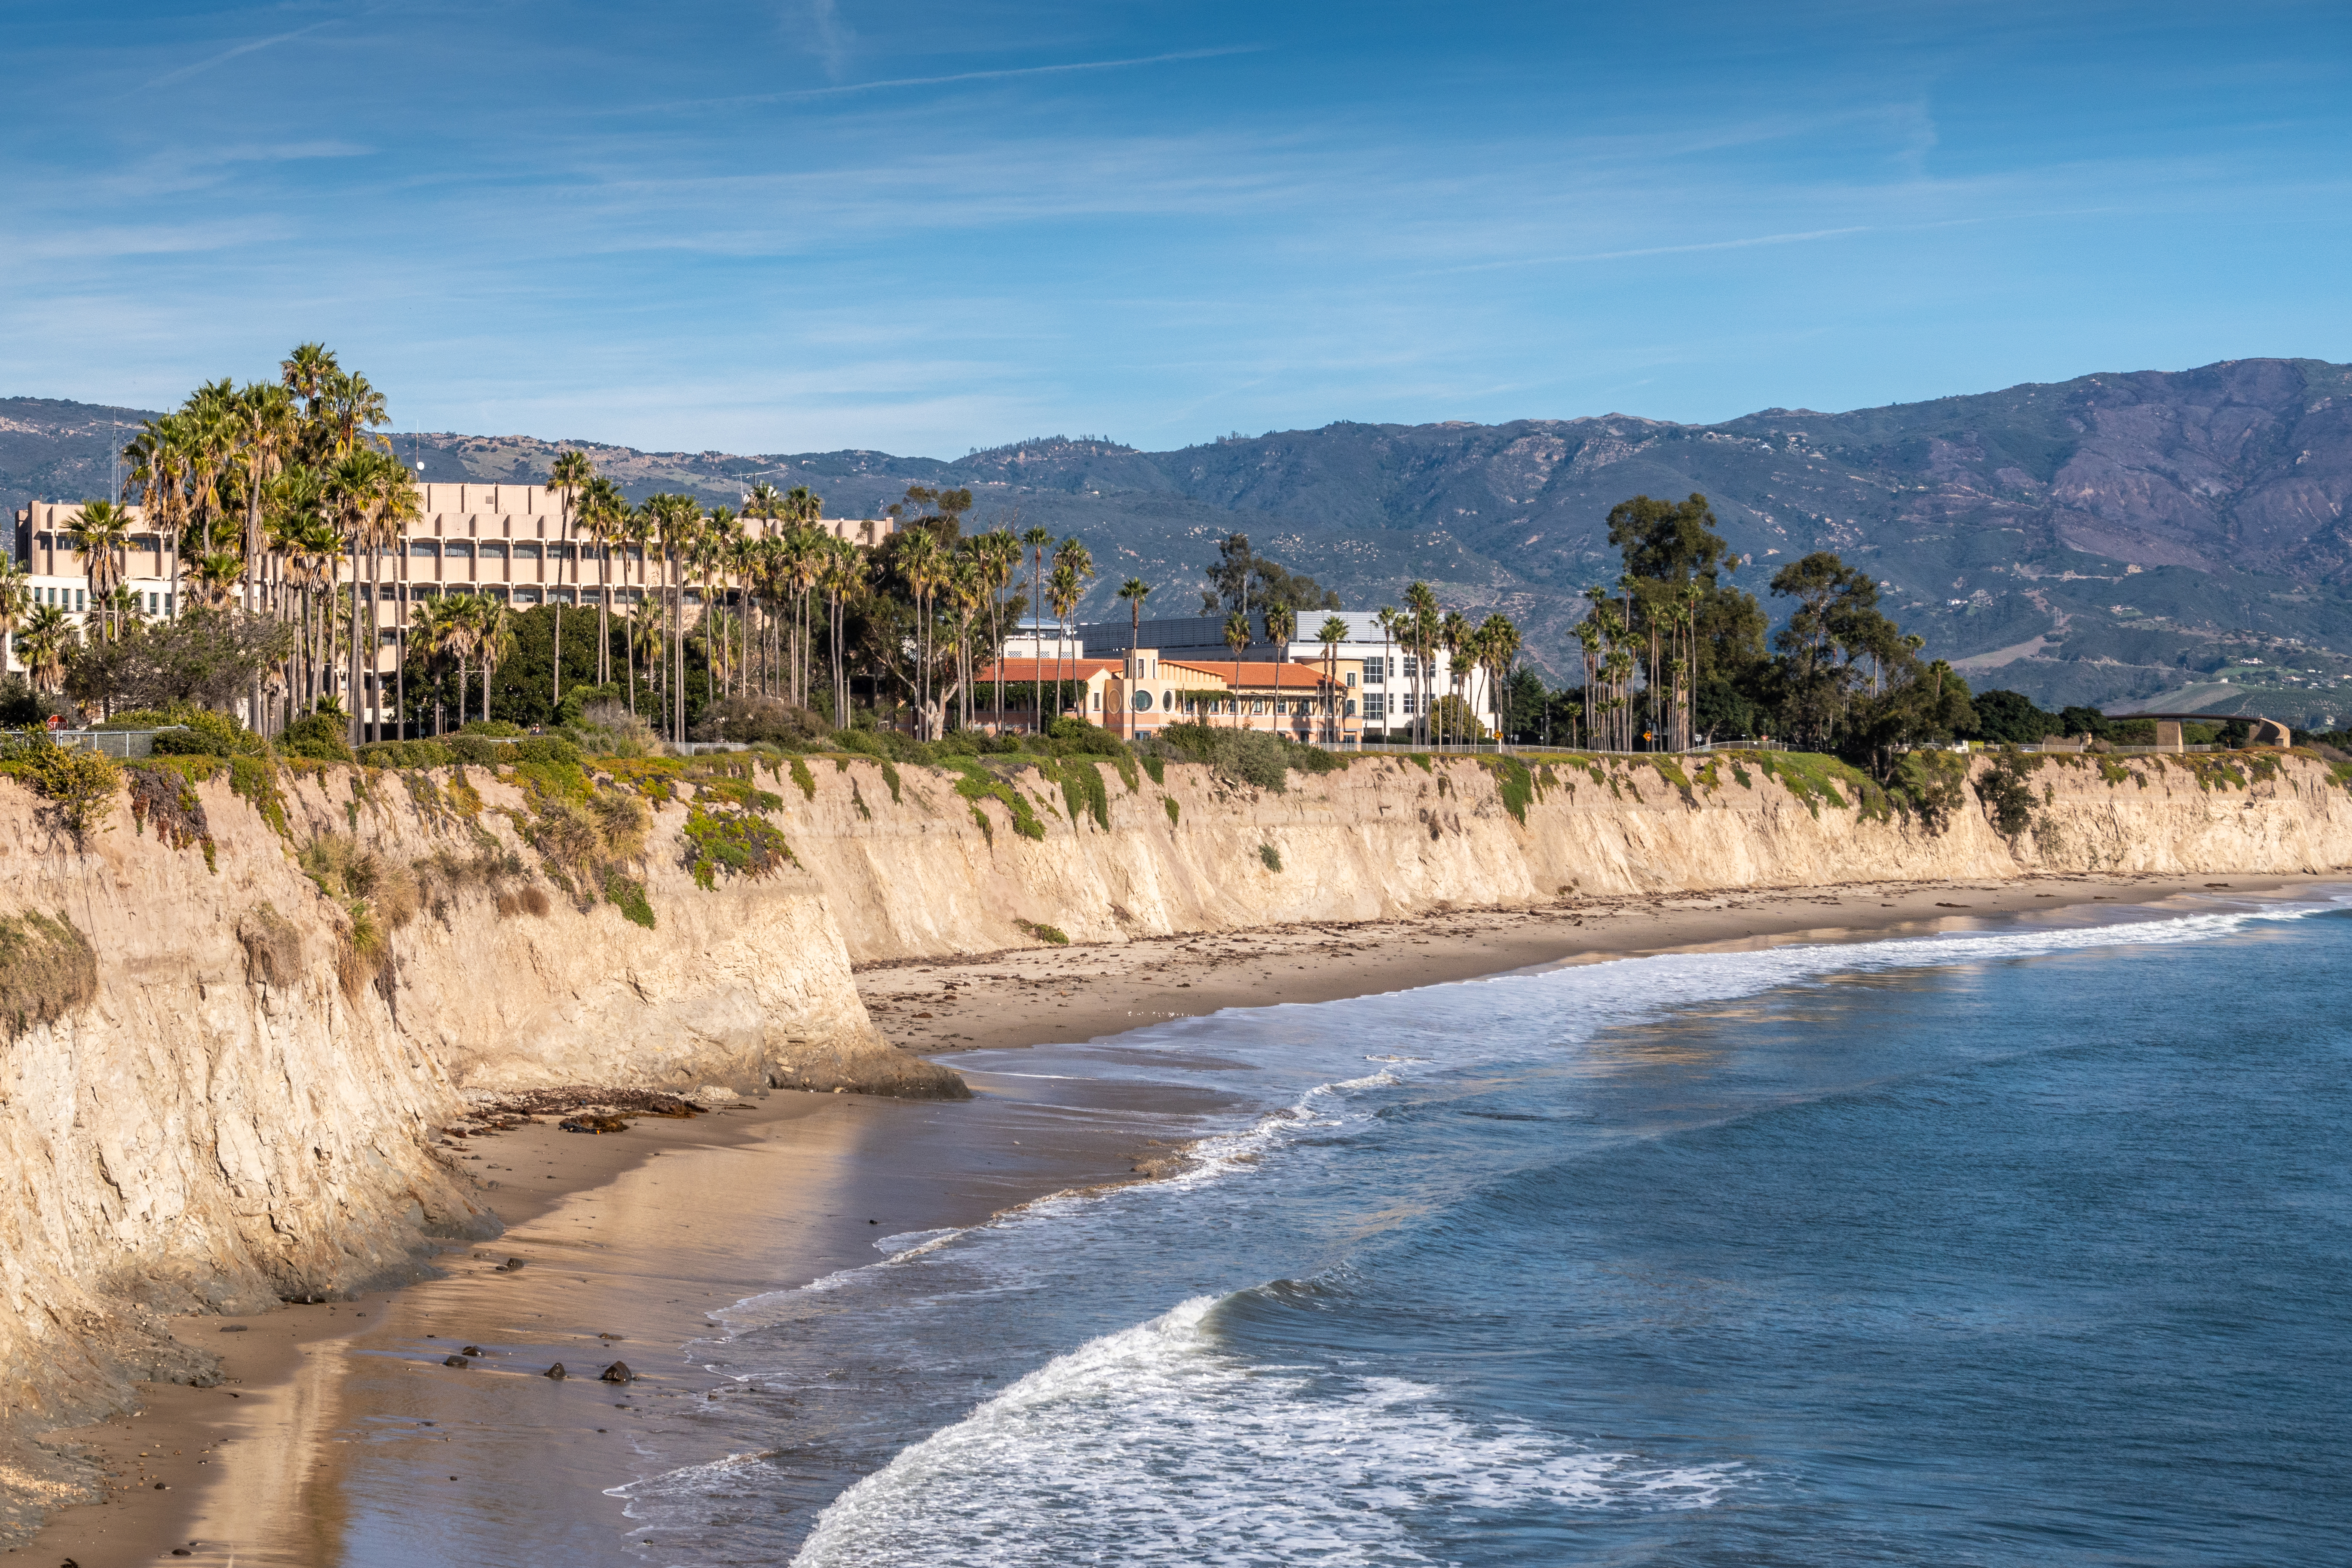 University California Santa Barbara sitting on a cliff overlooking the ocean